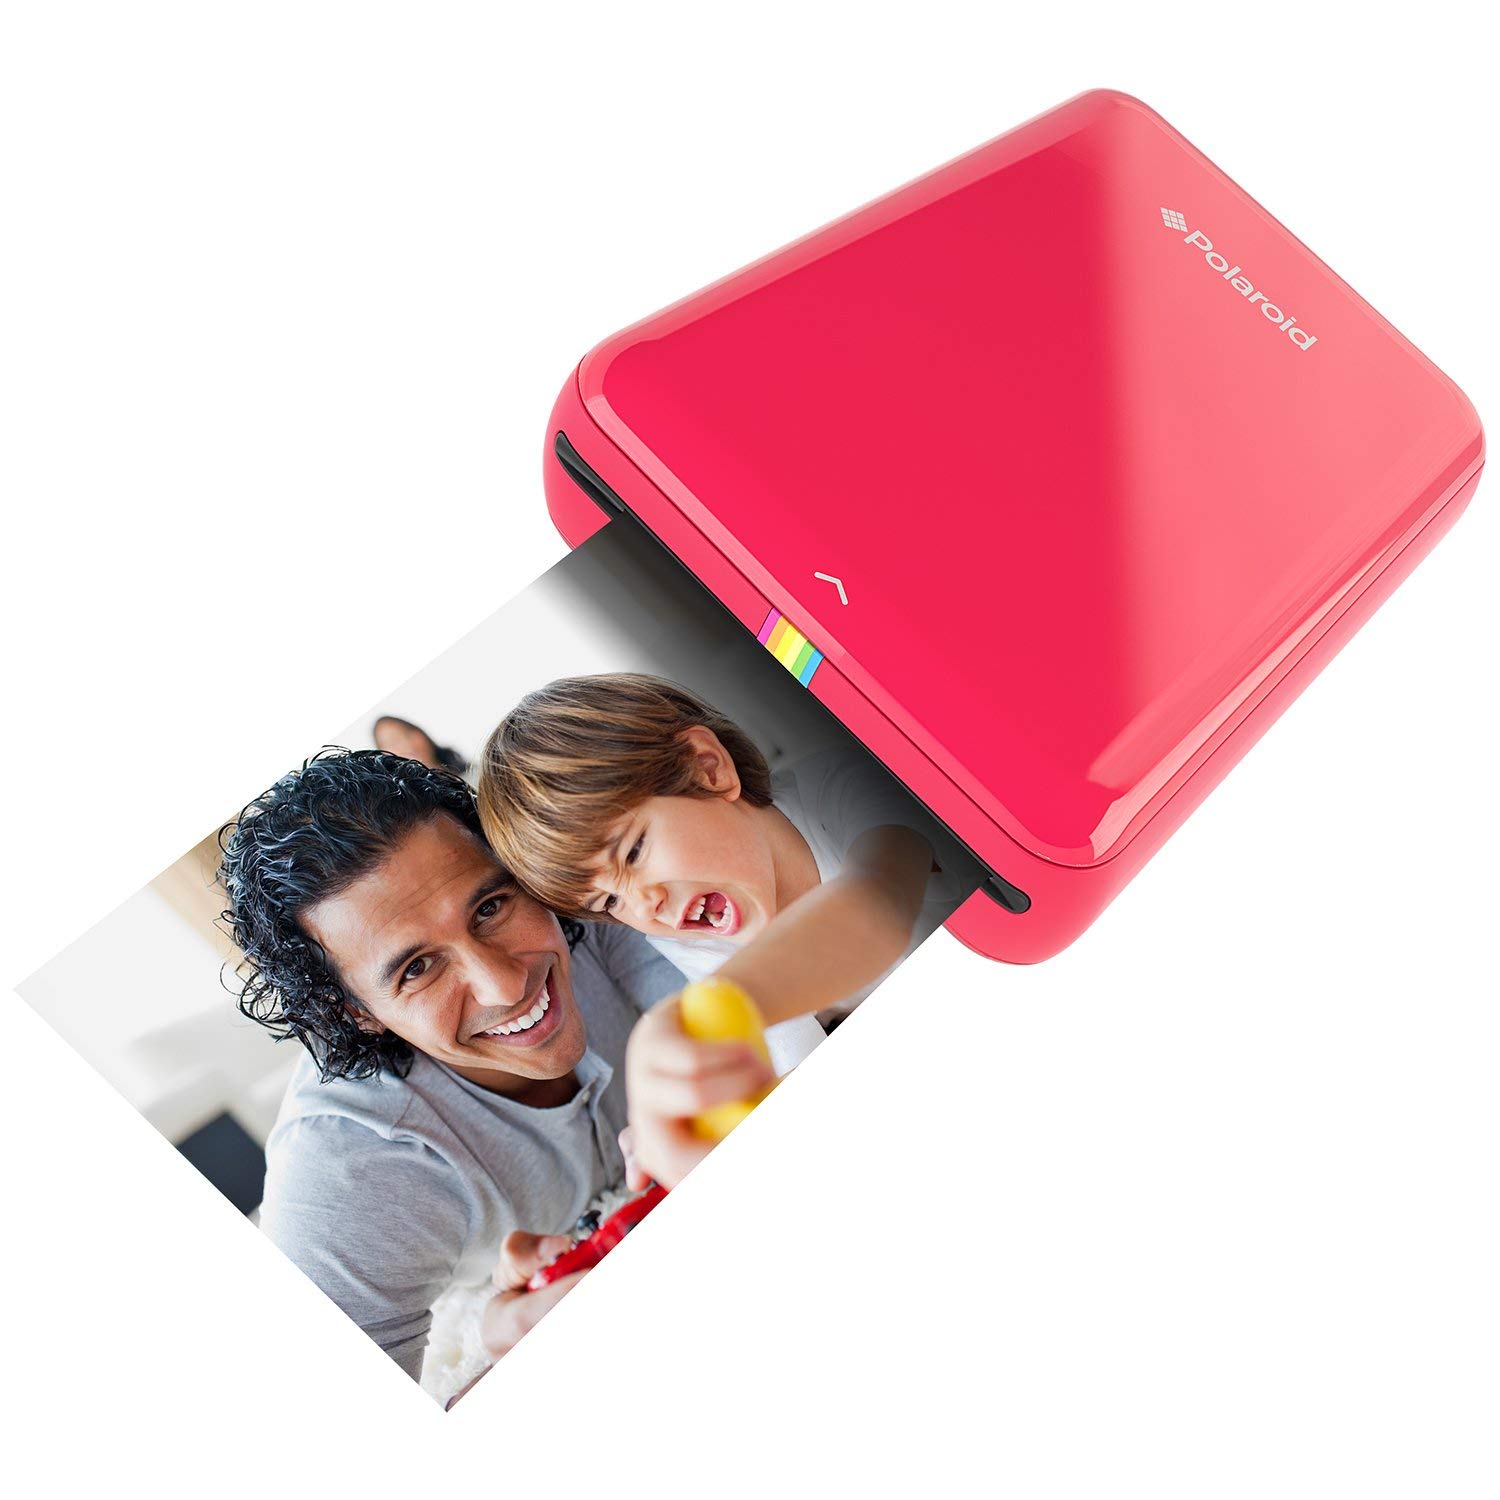 Polaroid Zip Mobile Instant Photo Printer, Red, POLMP01R - image 7 of 7